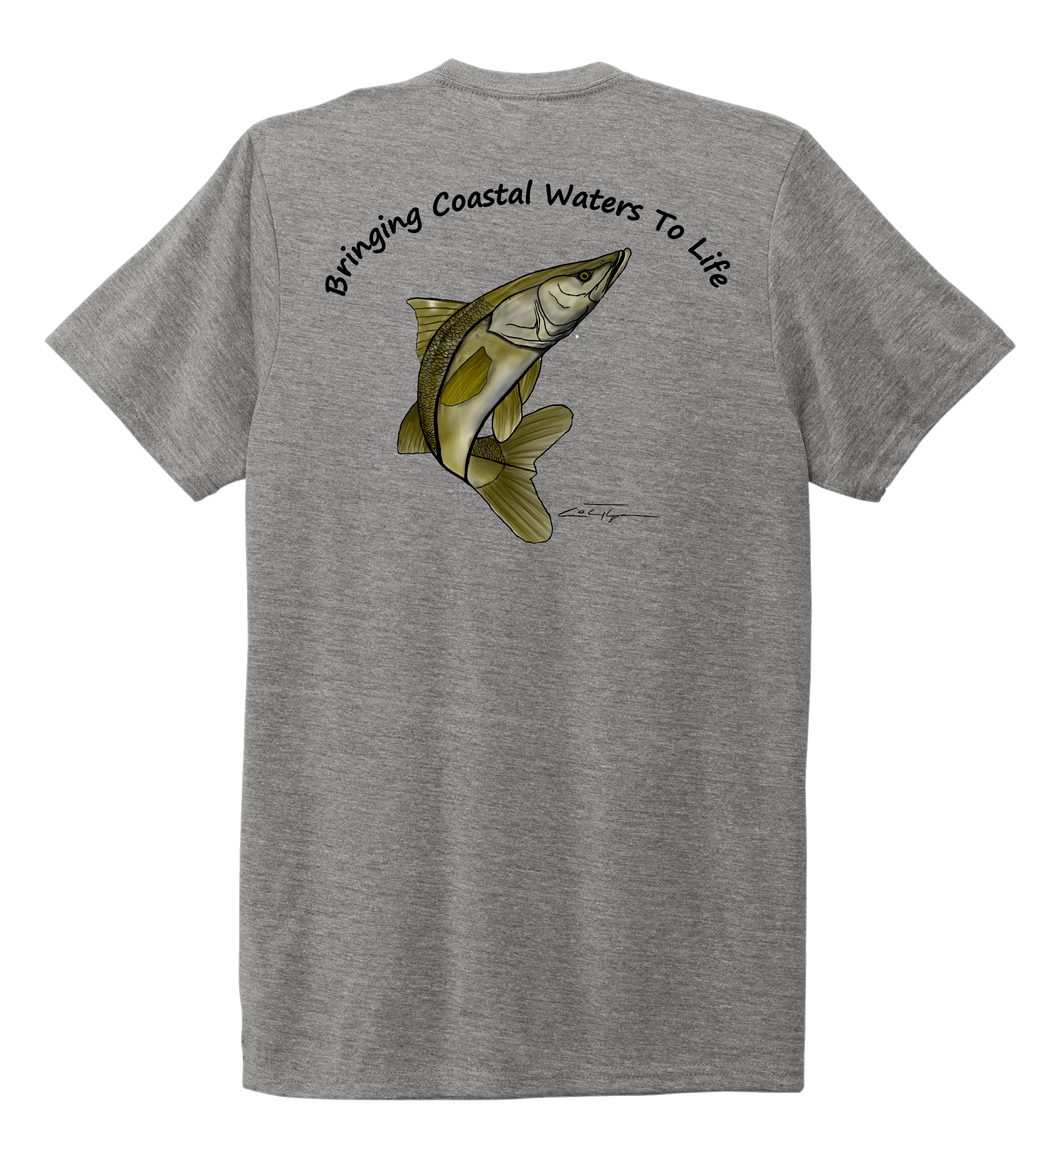 Ocean Habitats & Colin Thompson Collaboration - Unisex Crew Neck T-shirt in Oyster Grey